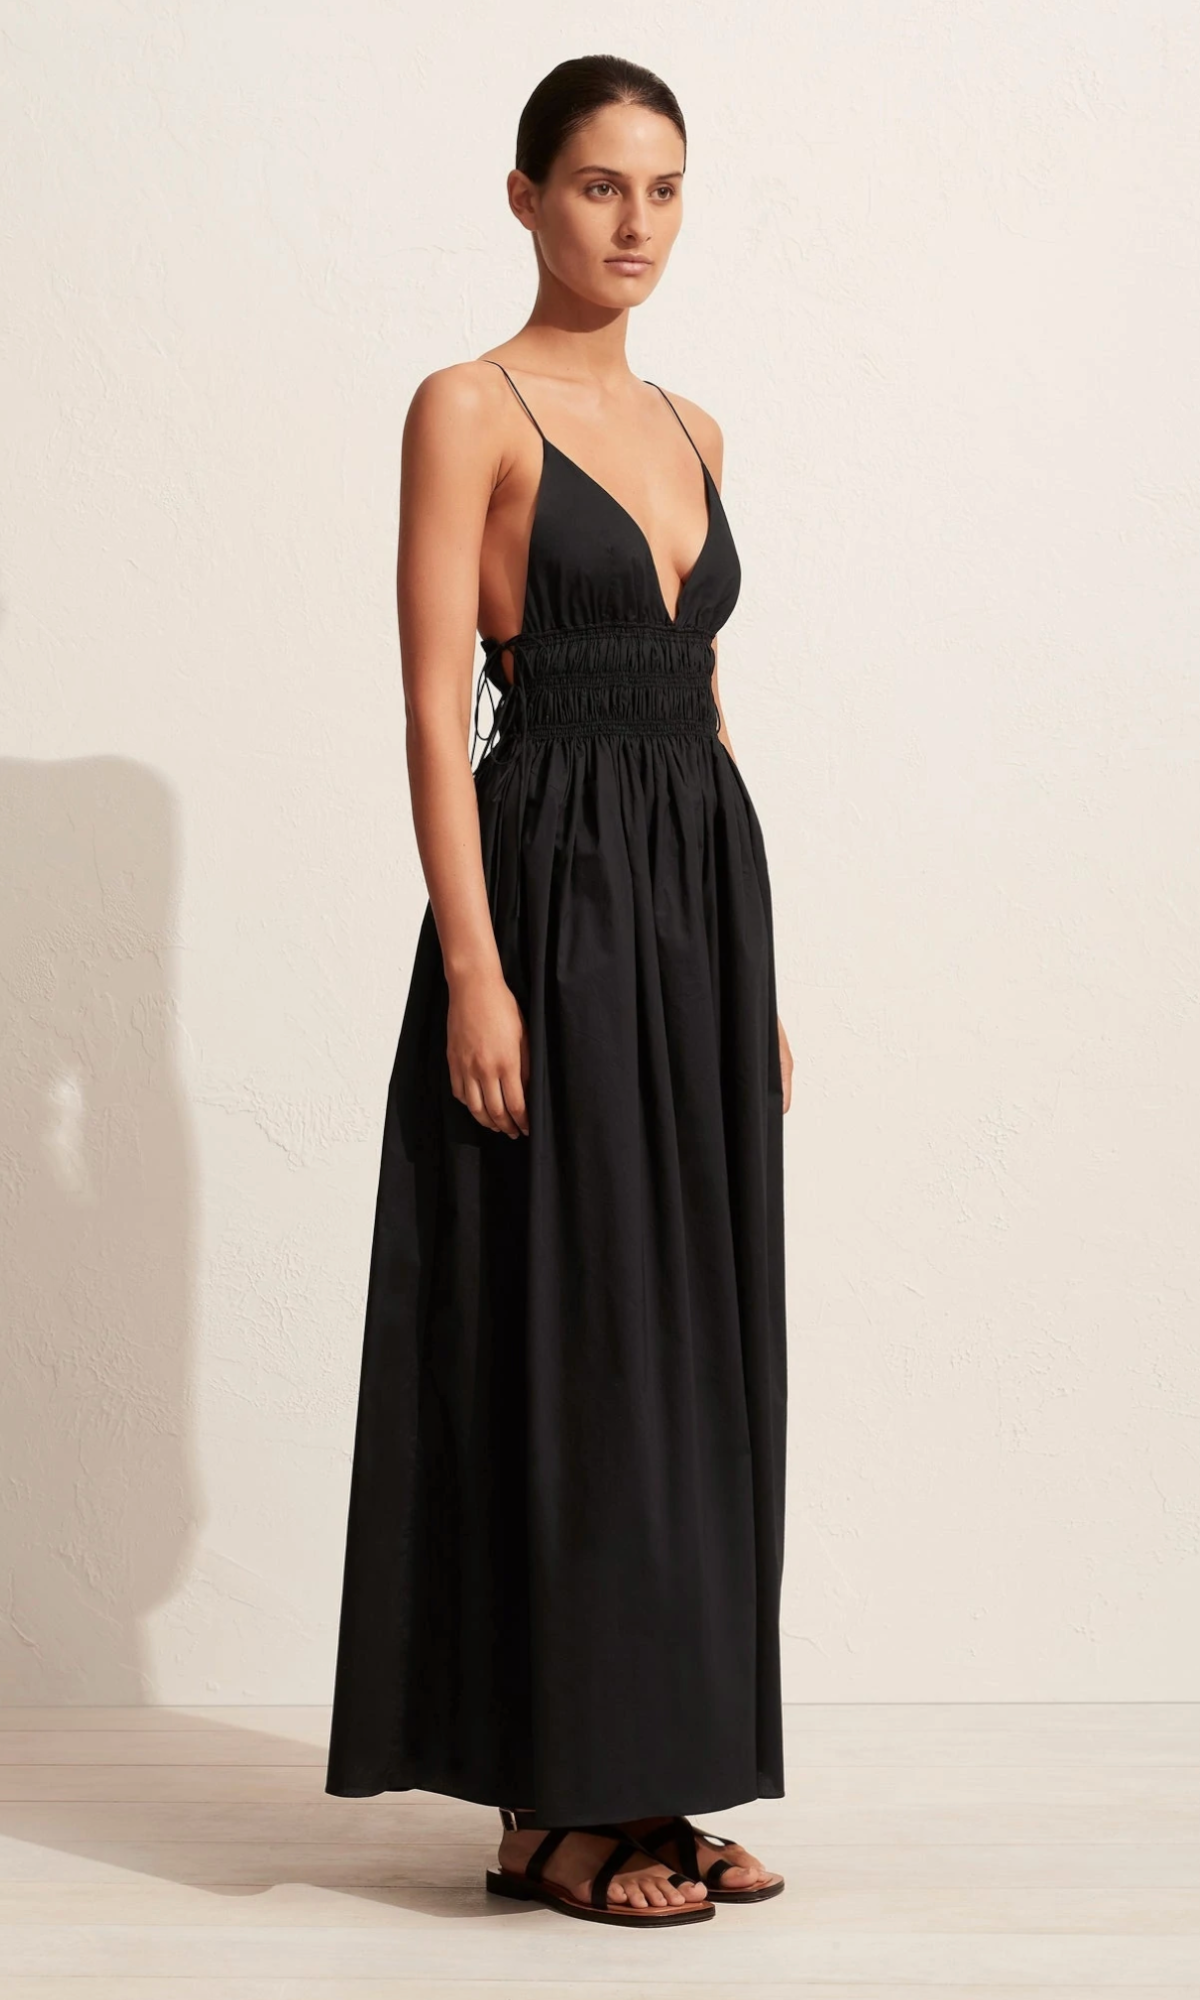 Shirred Triangle Dress in Black